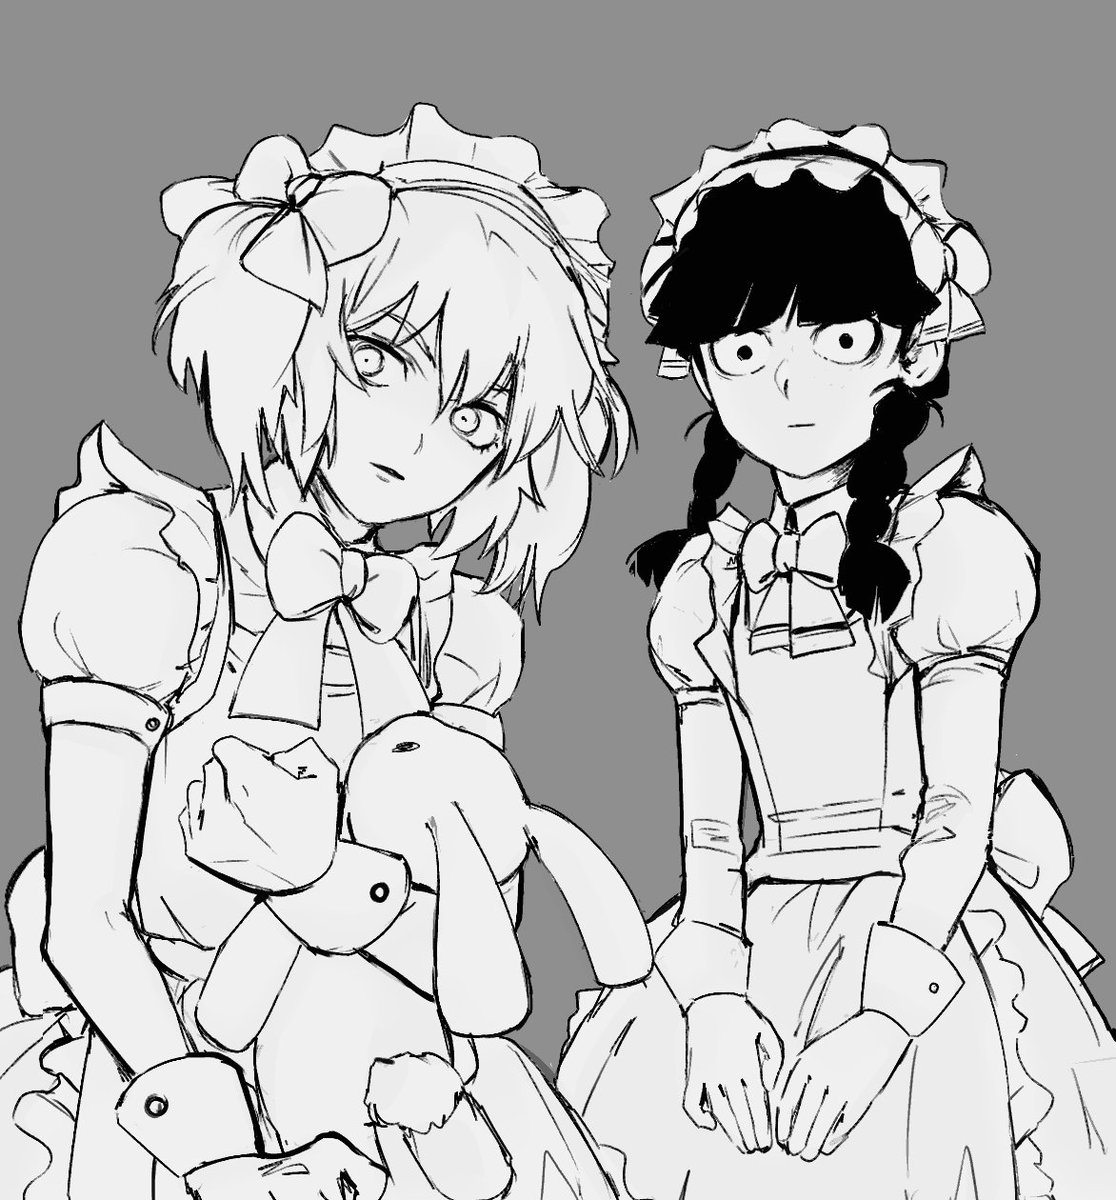 I doodled some more maids! 